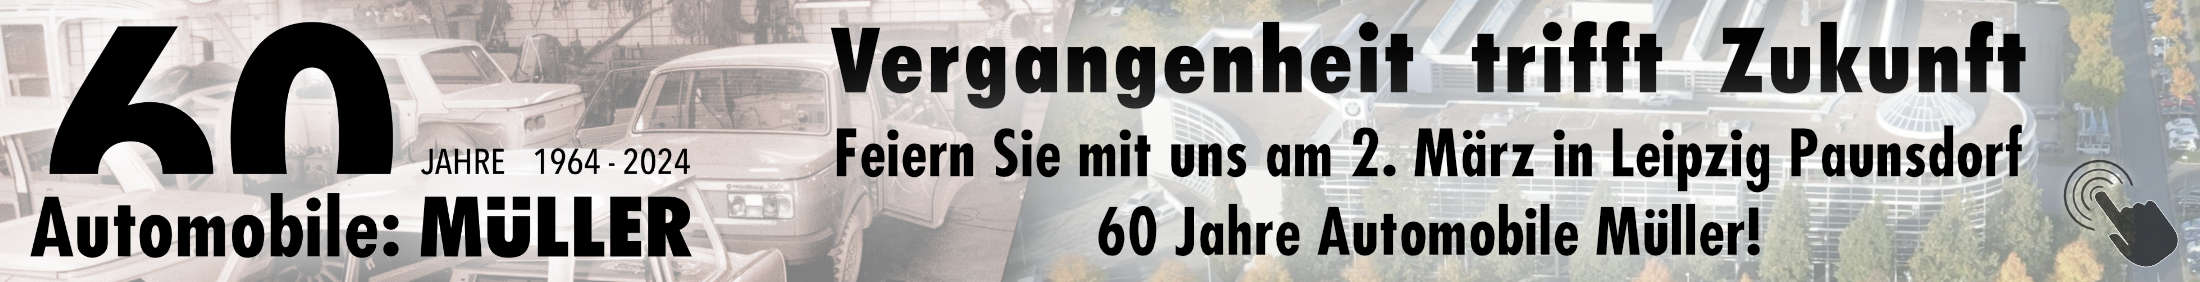 60 Jahre Automobile Müller